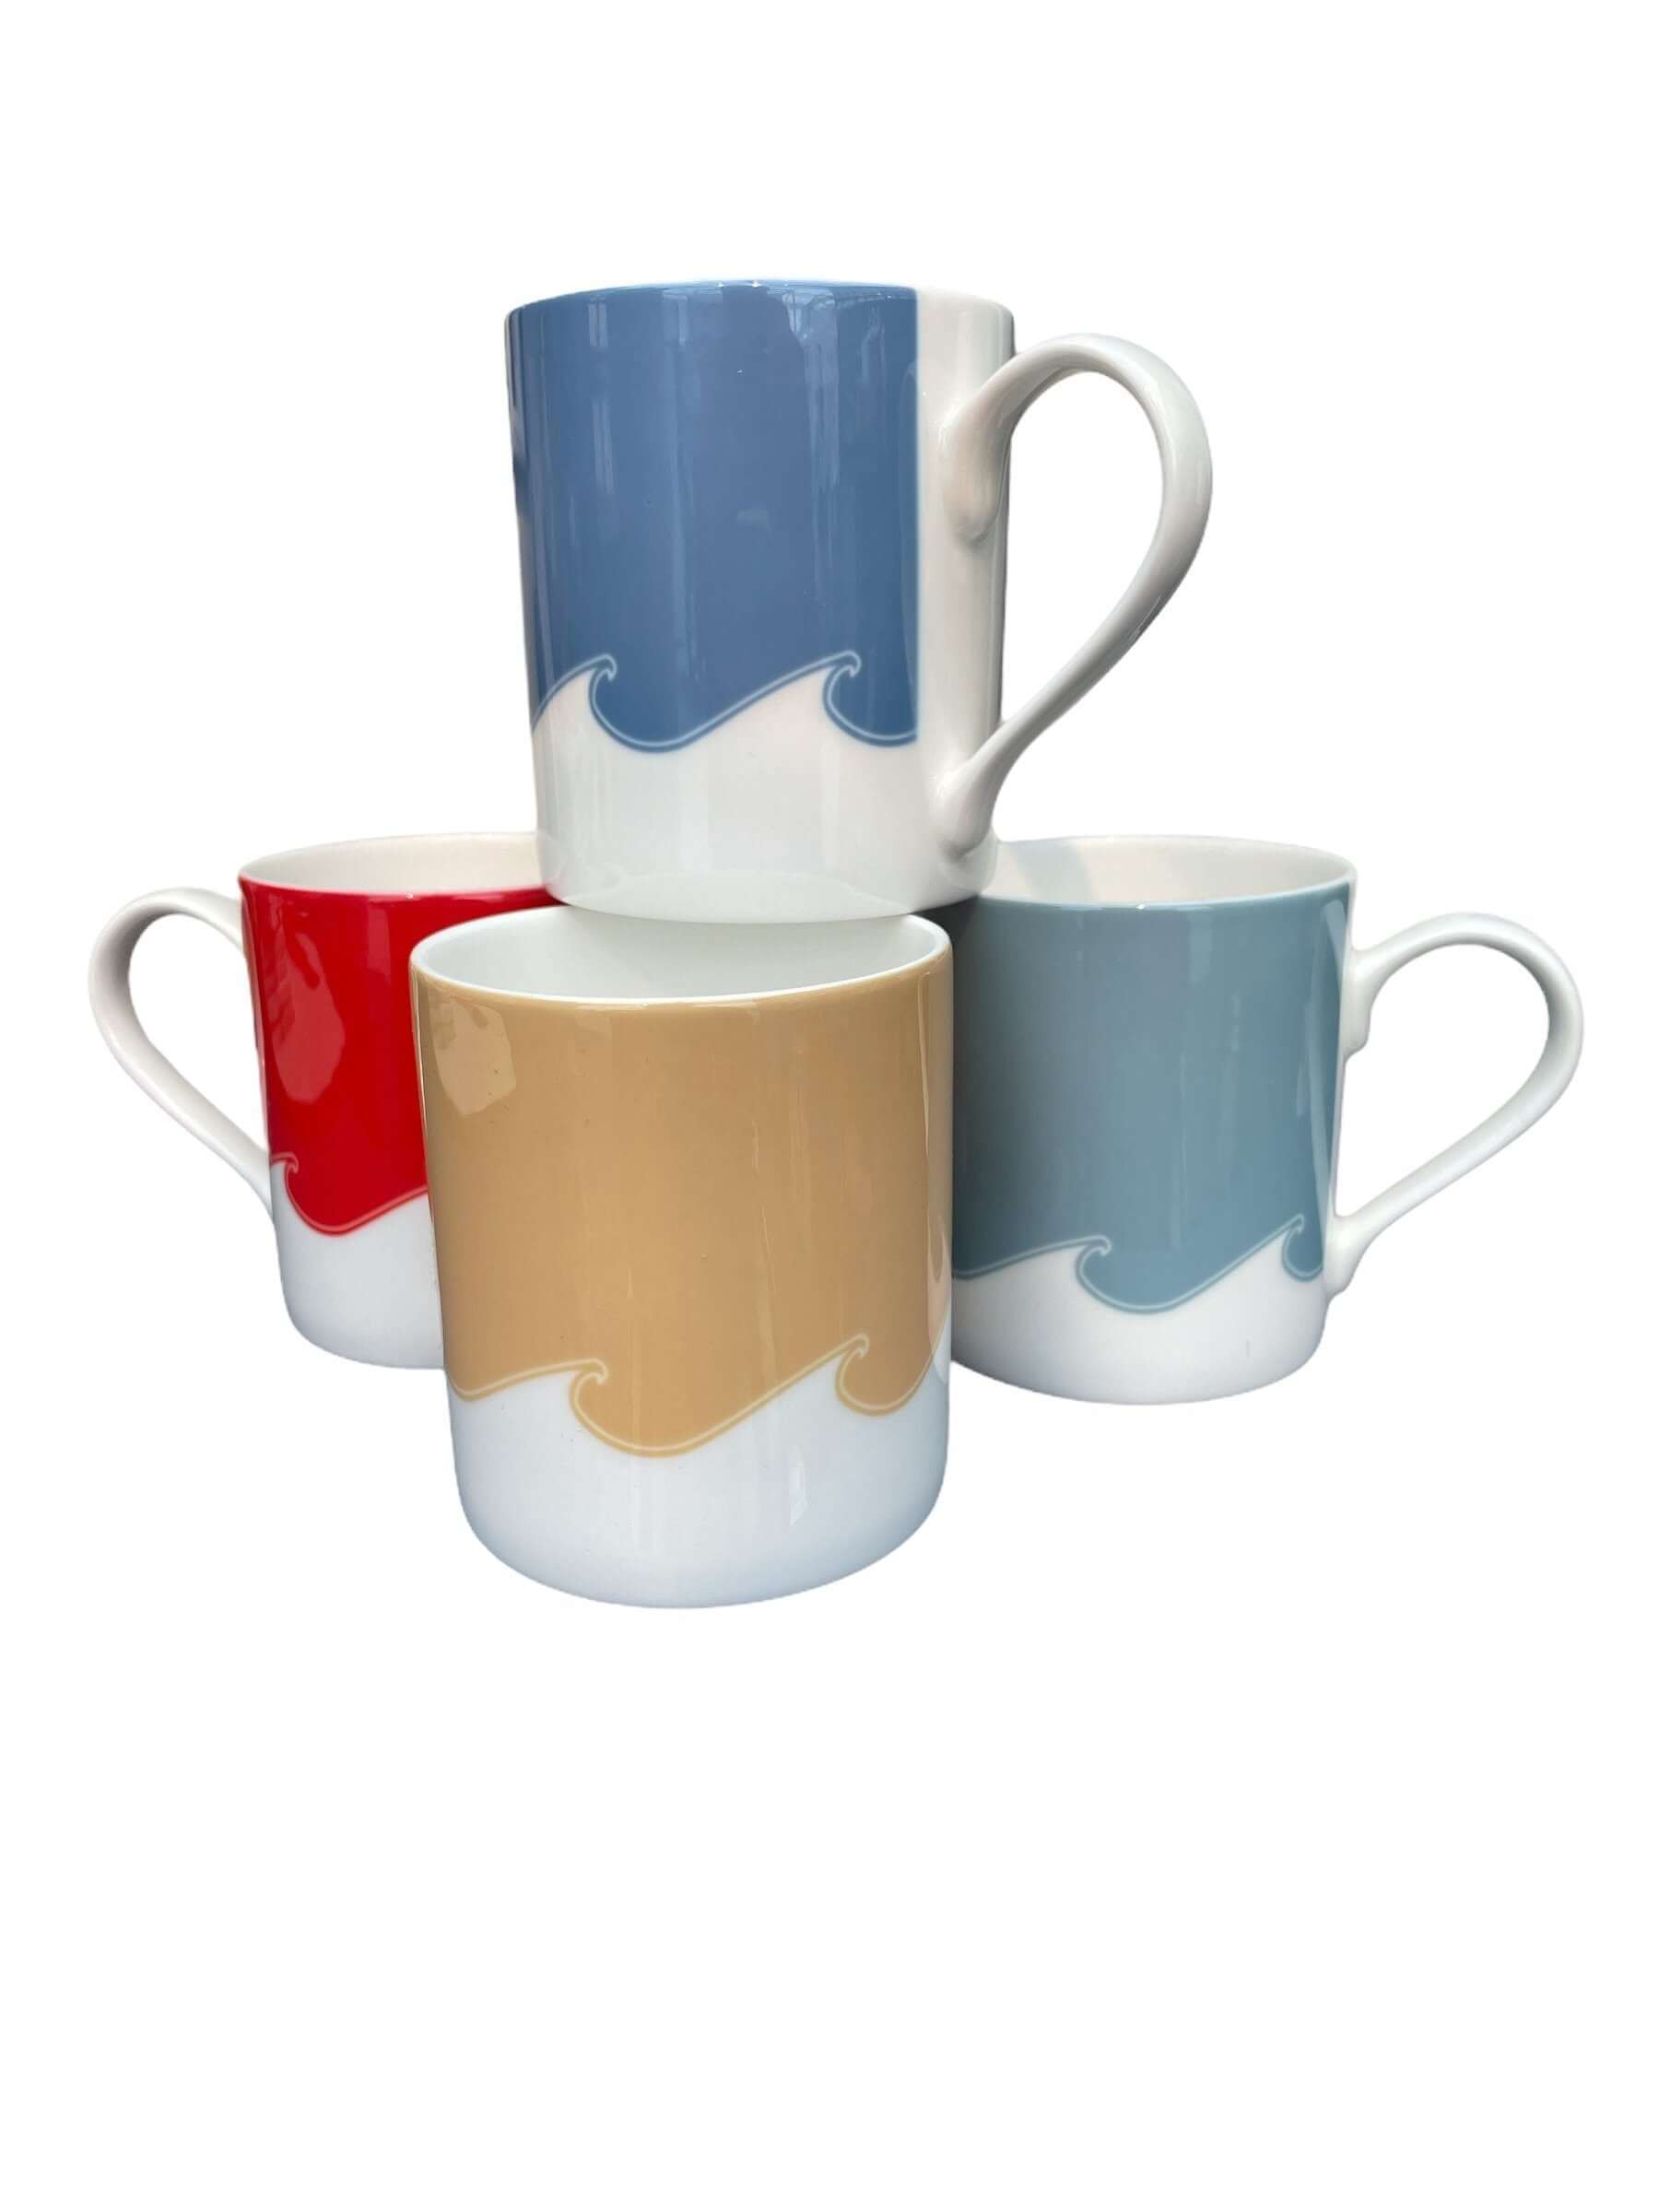 Waves Mug Set (Four Mugs) Mug Set Mustard and Gray Ltd Shropshire UK